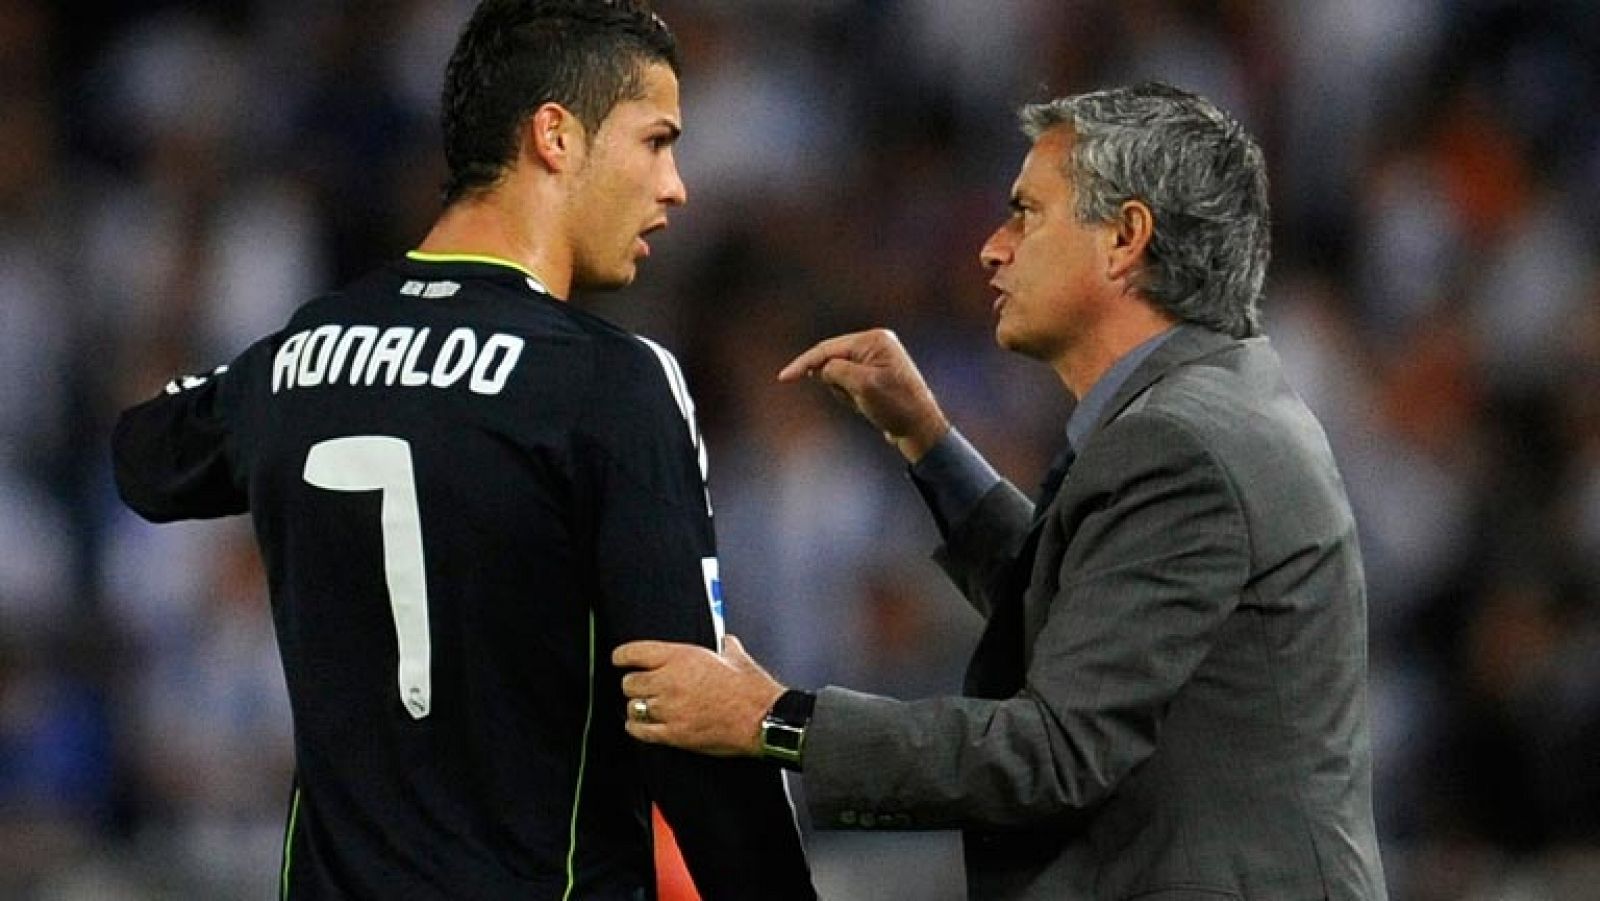 Telediario 1: Cristiano vs Mourinho, segundo asalto | RTVE Play